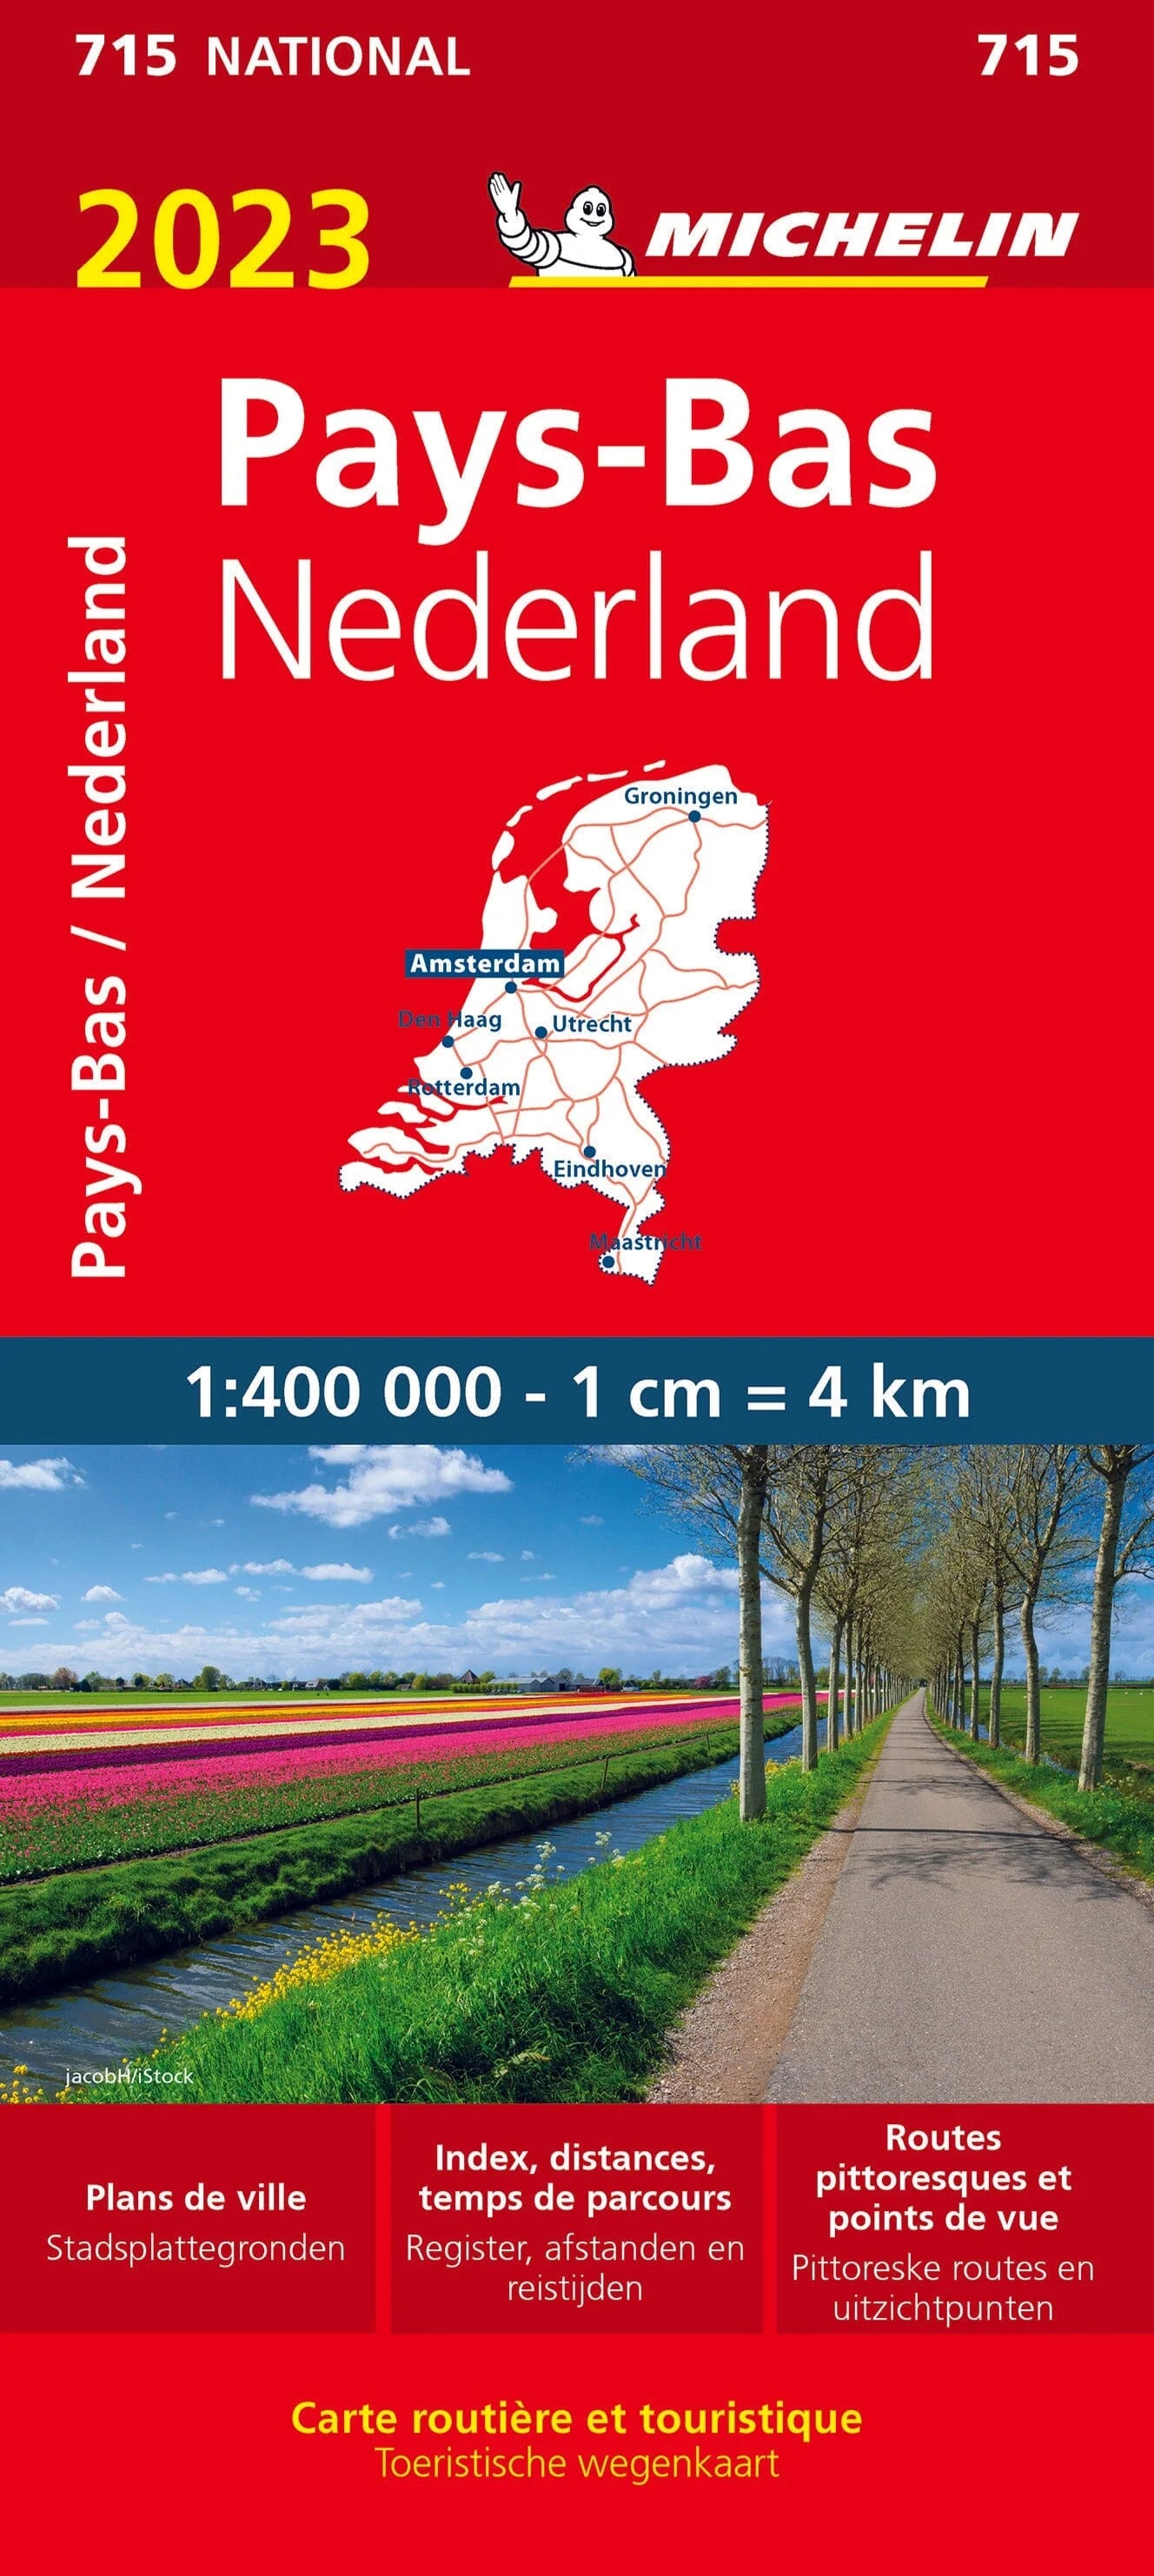 Carte Routiere Ndeg 715 Pays Bas 2023 Michelin Carte Pliee Michelin 455536.webp?v=1685021239